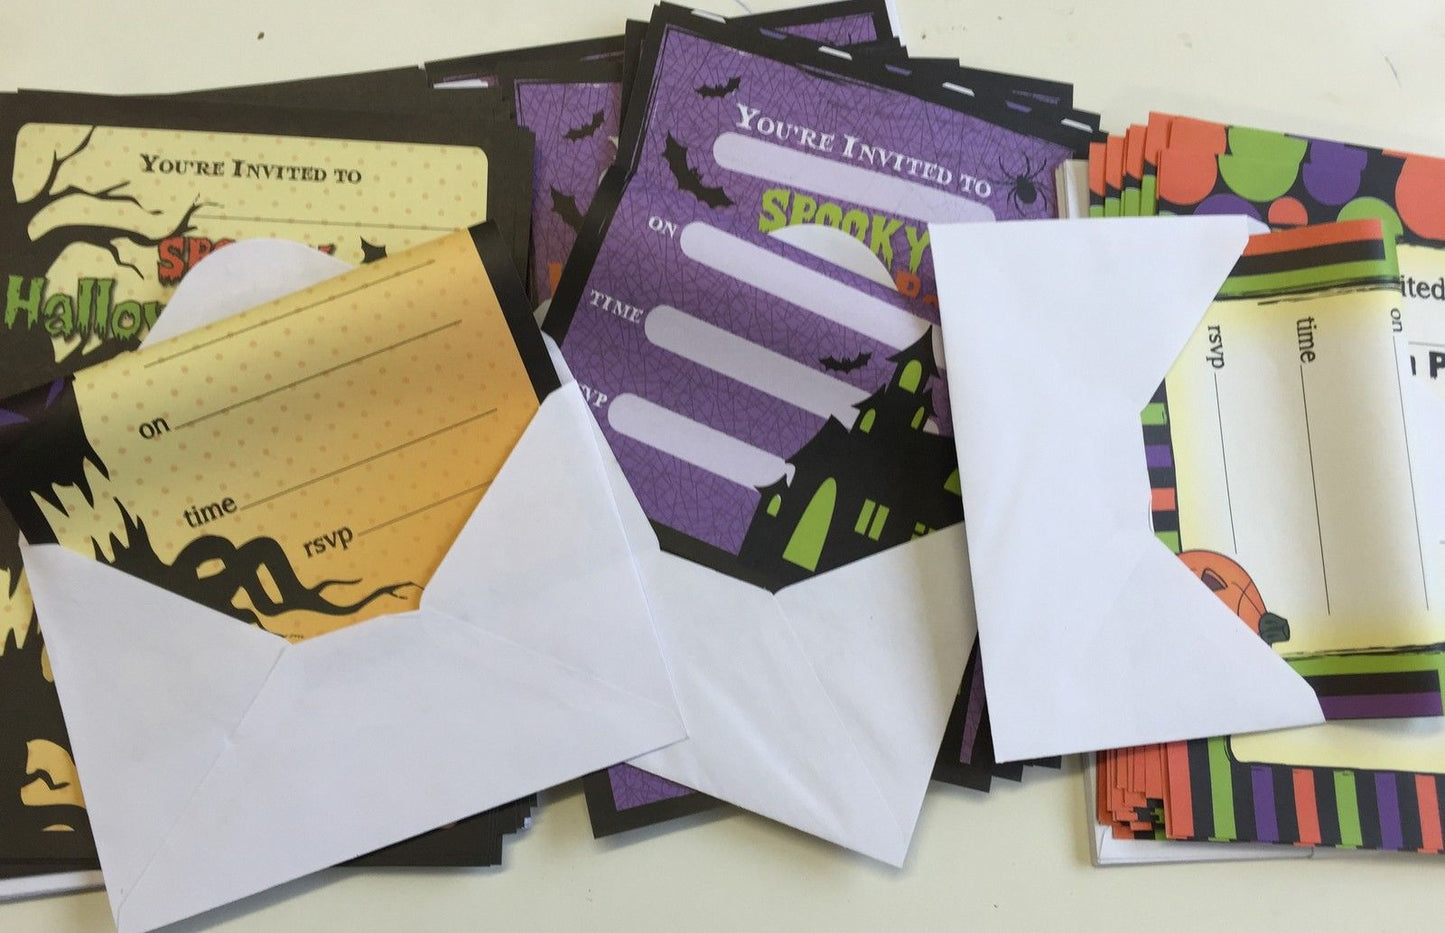 Pack of 20 Halloween Invitations & Envelopes